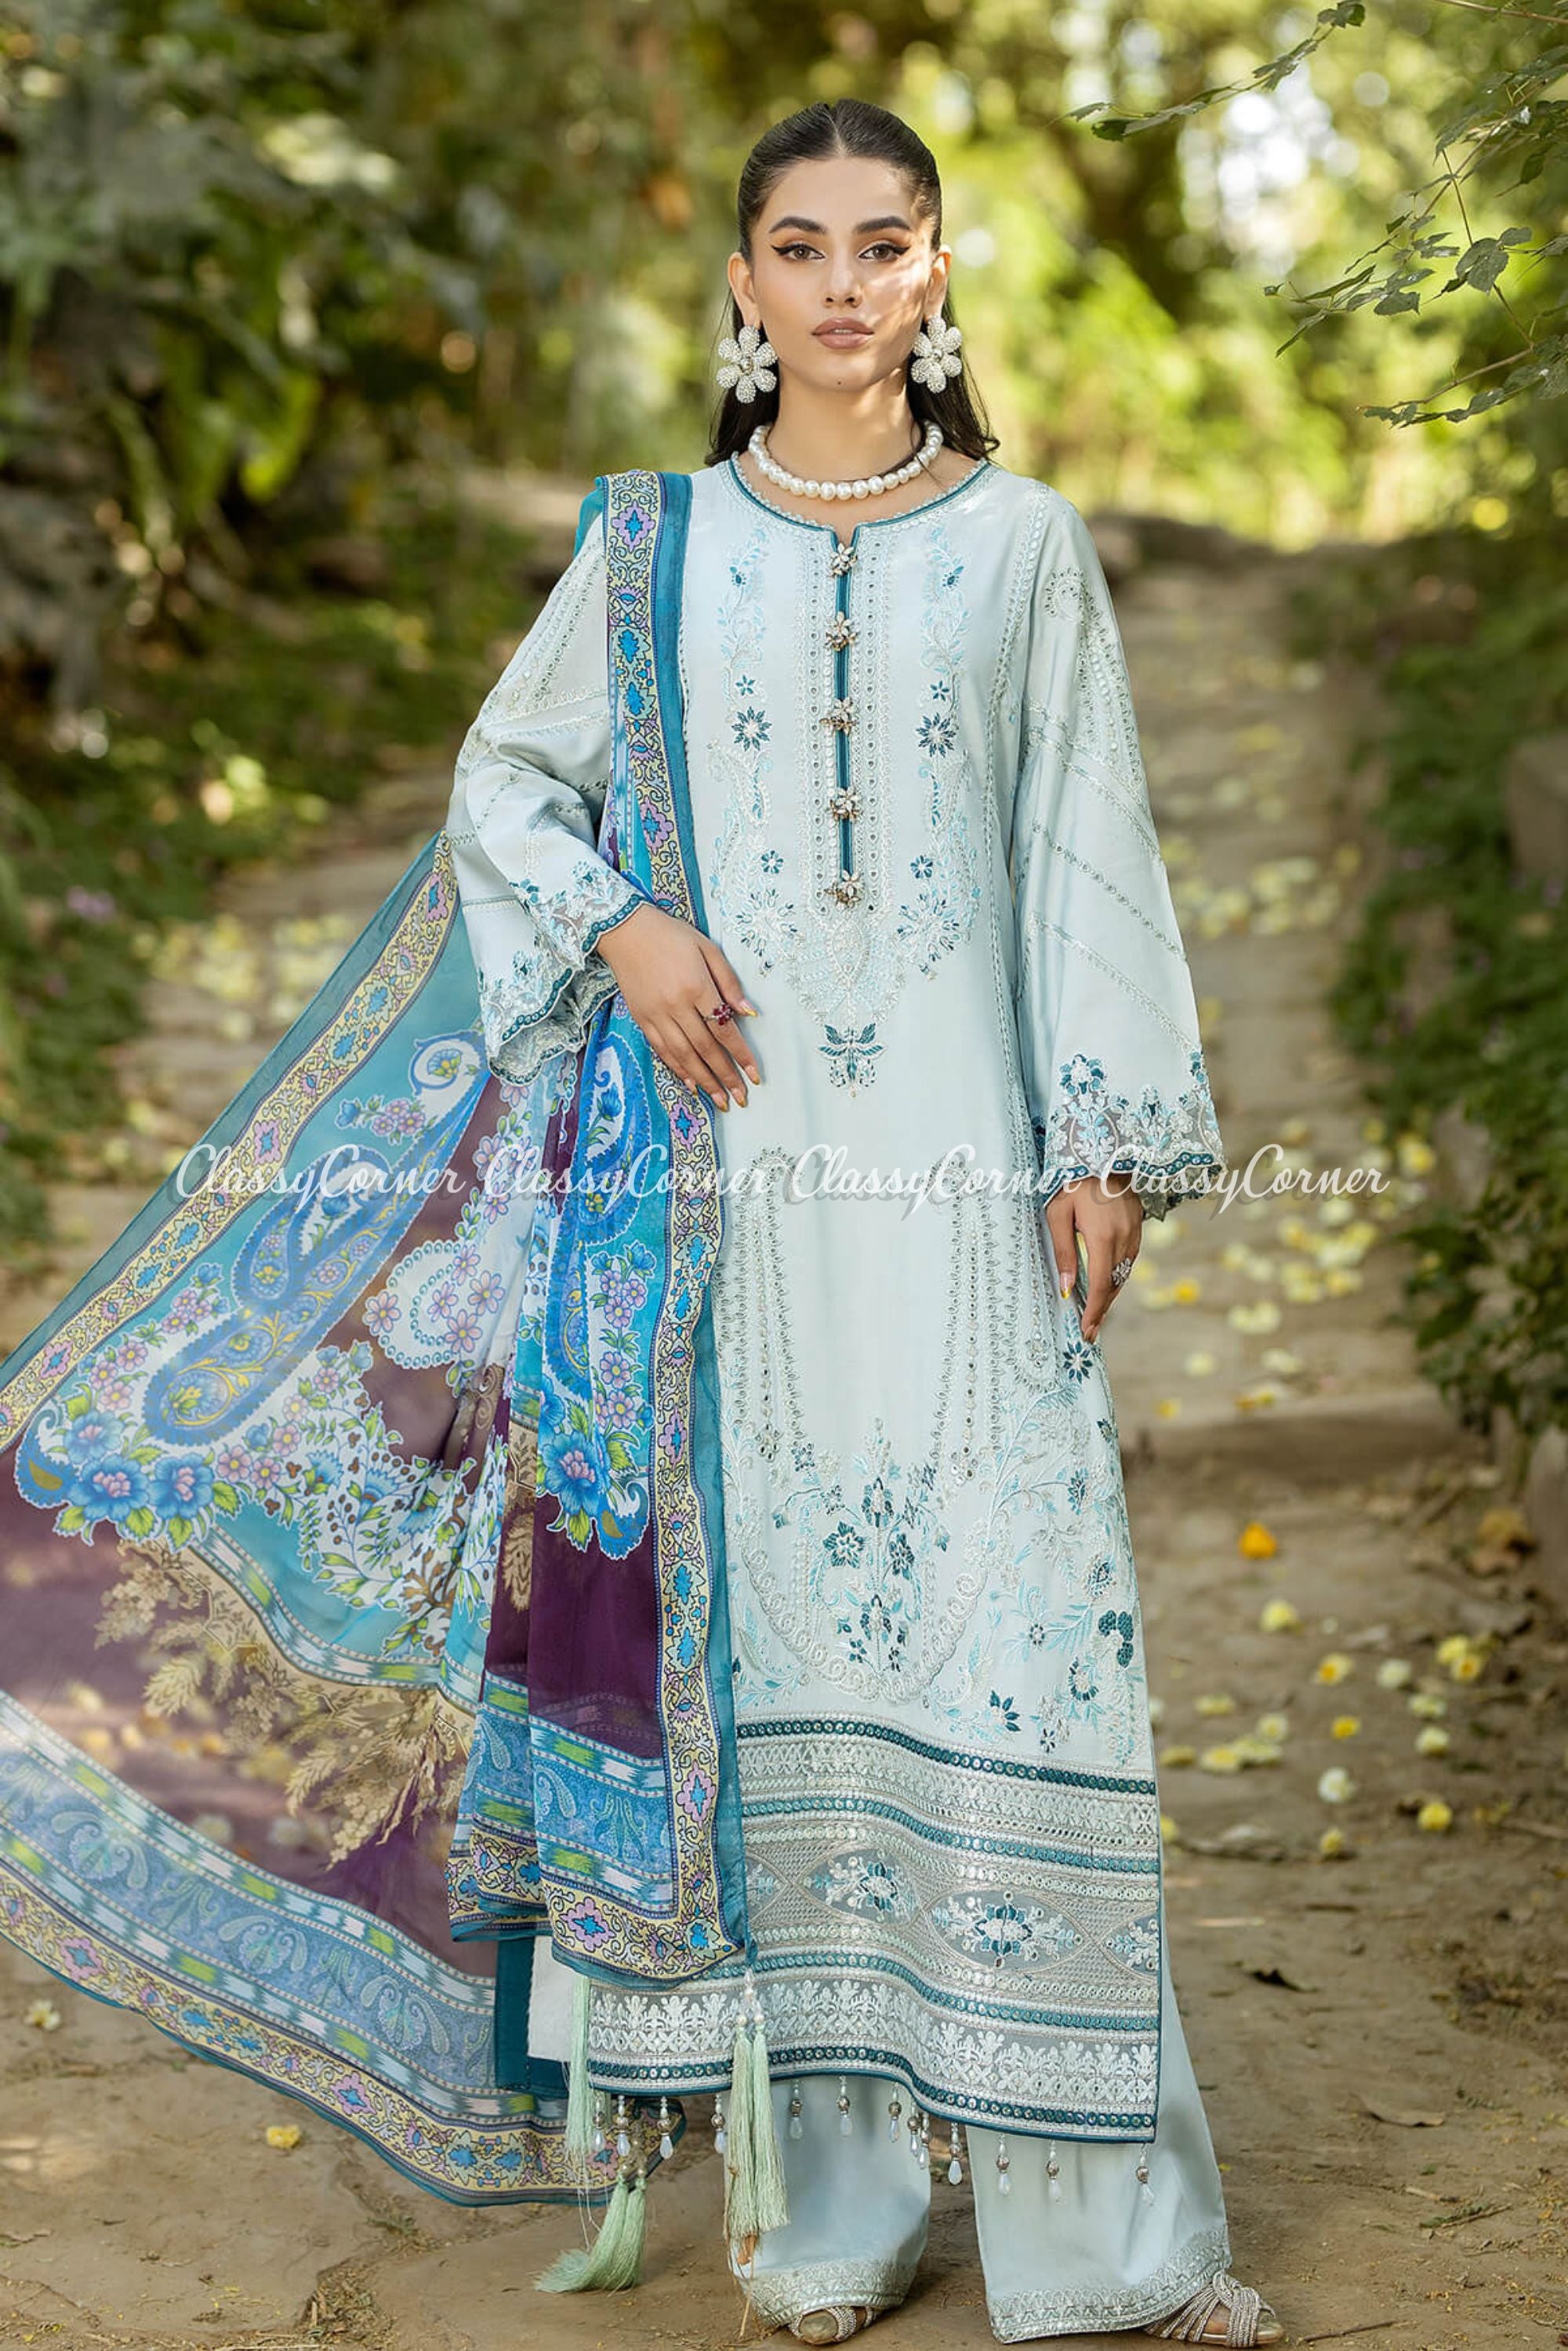 Women's Pakistani Formal Outfits